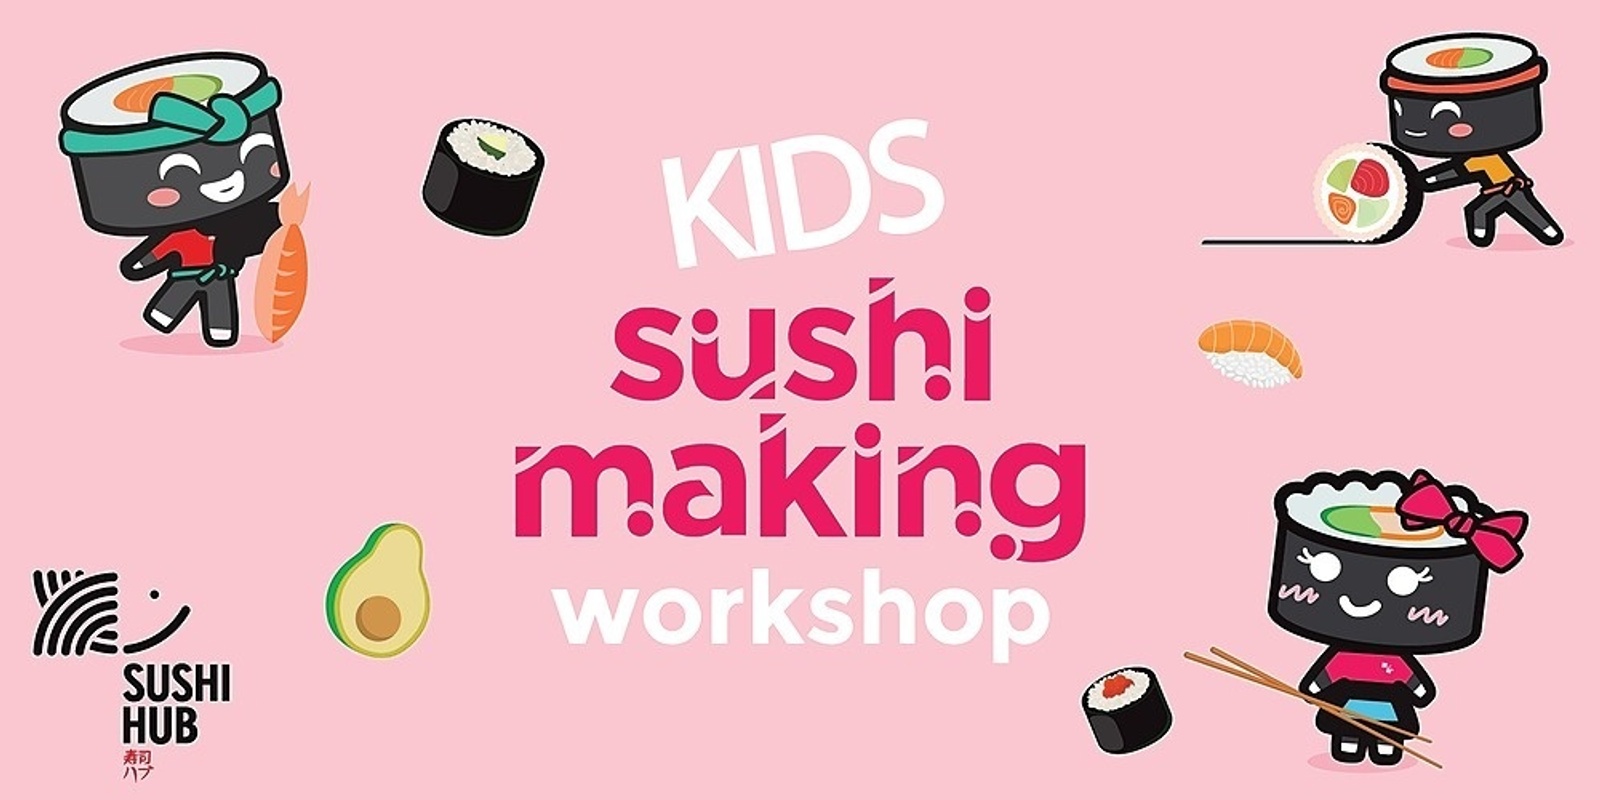 Banner image for Sushi Hub x Grove Square Kids Sushi Making Workshop